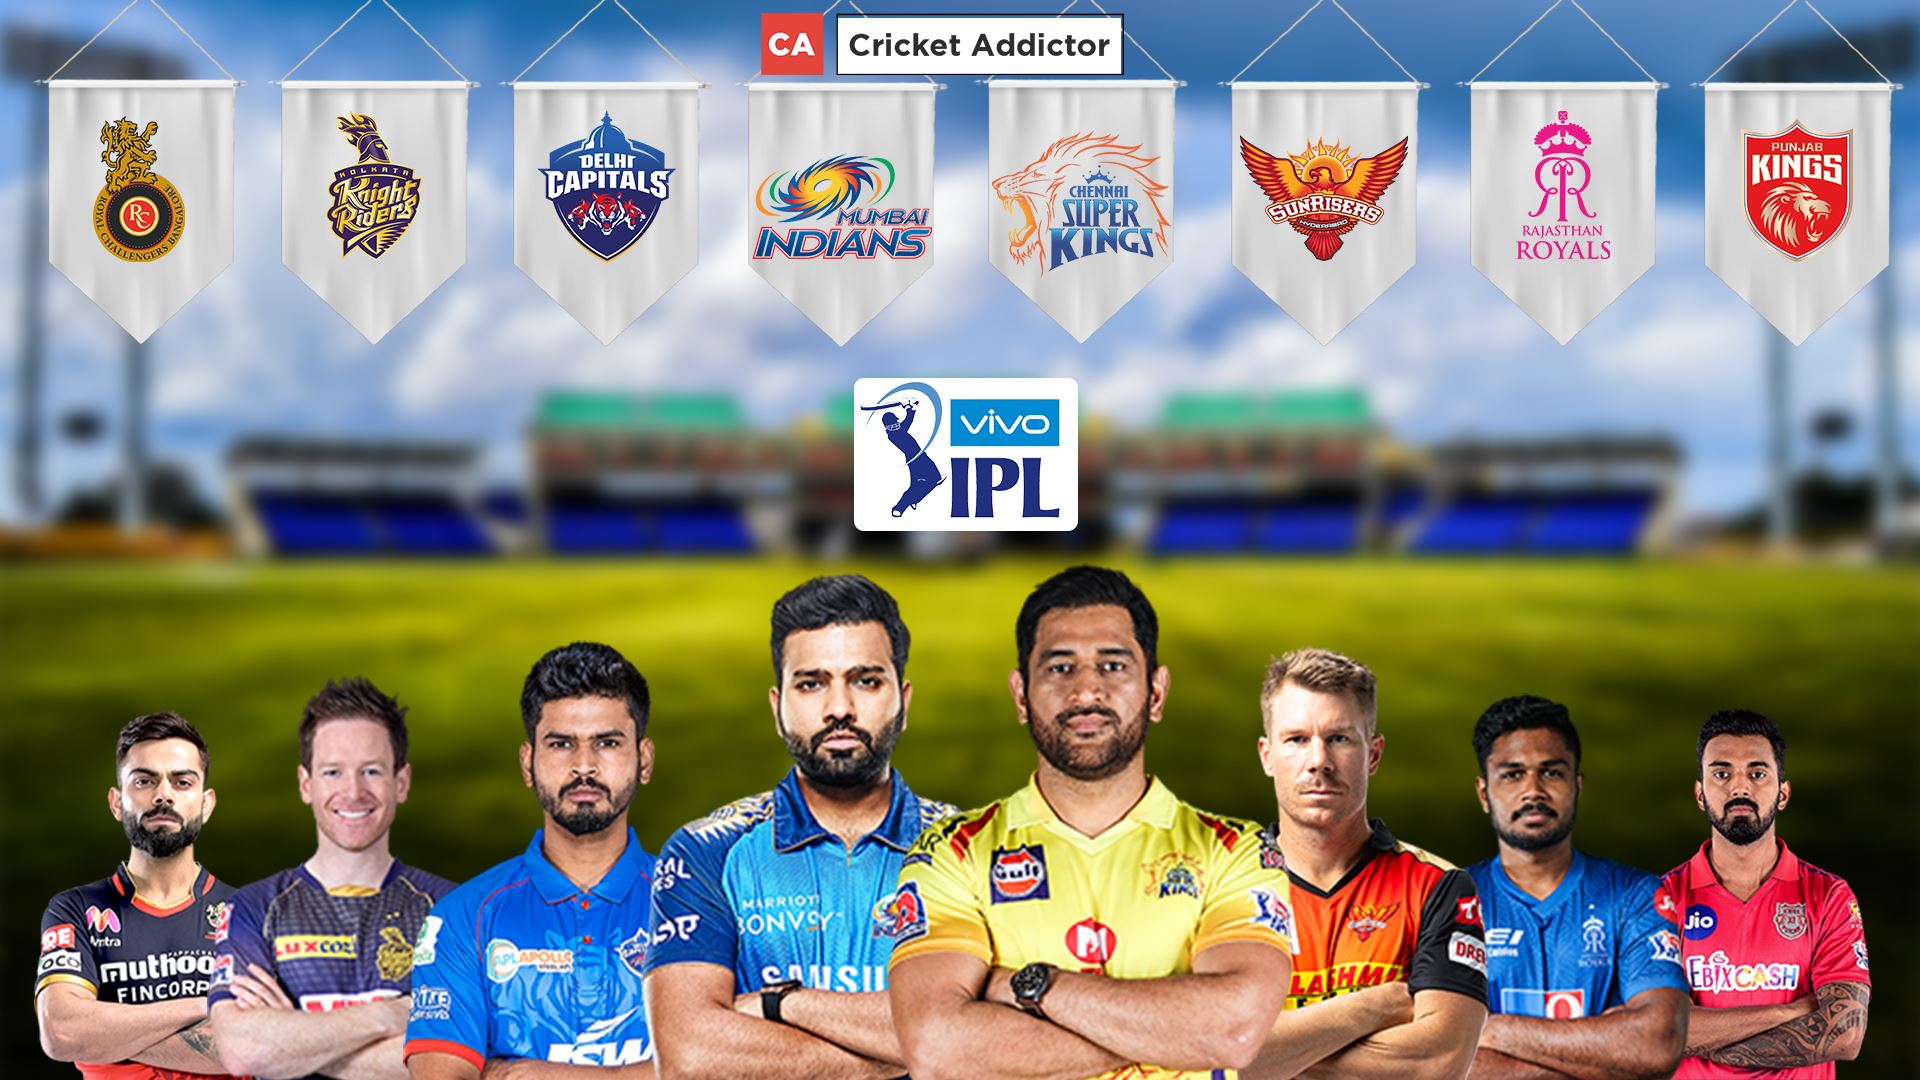 IPL 2021: Virat Kohli To Open The Batting For Royal Challengers Bangalore (RCB) In The Tournament